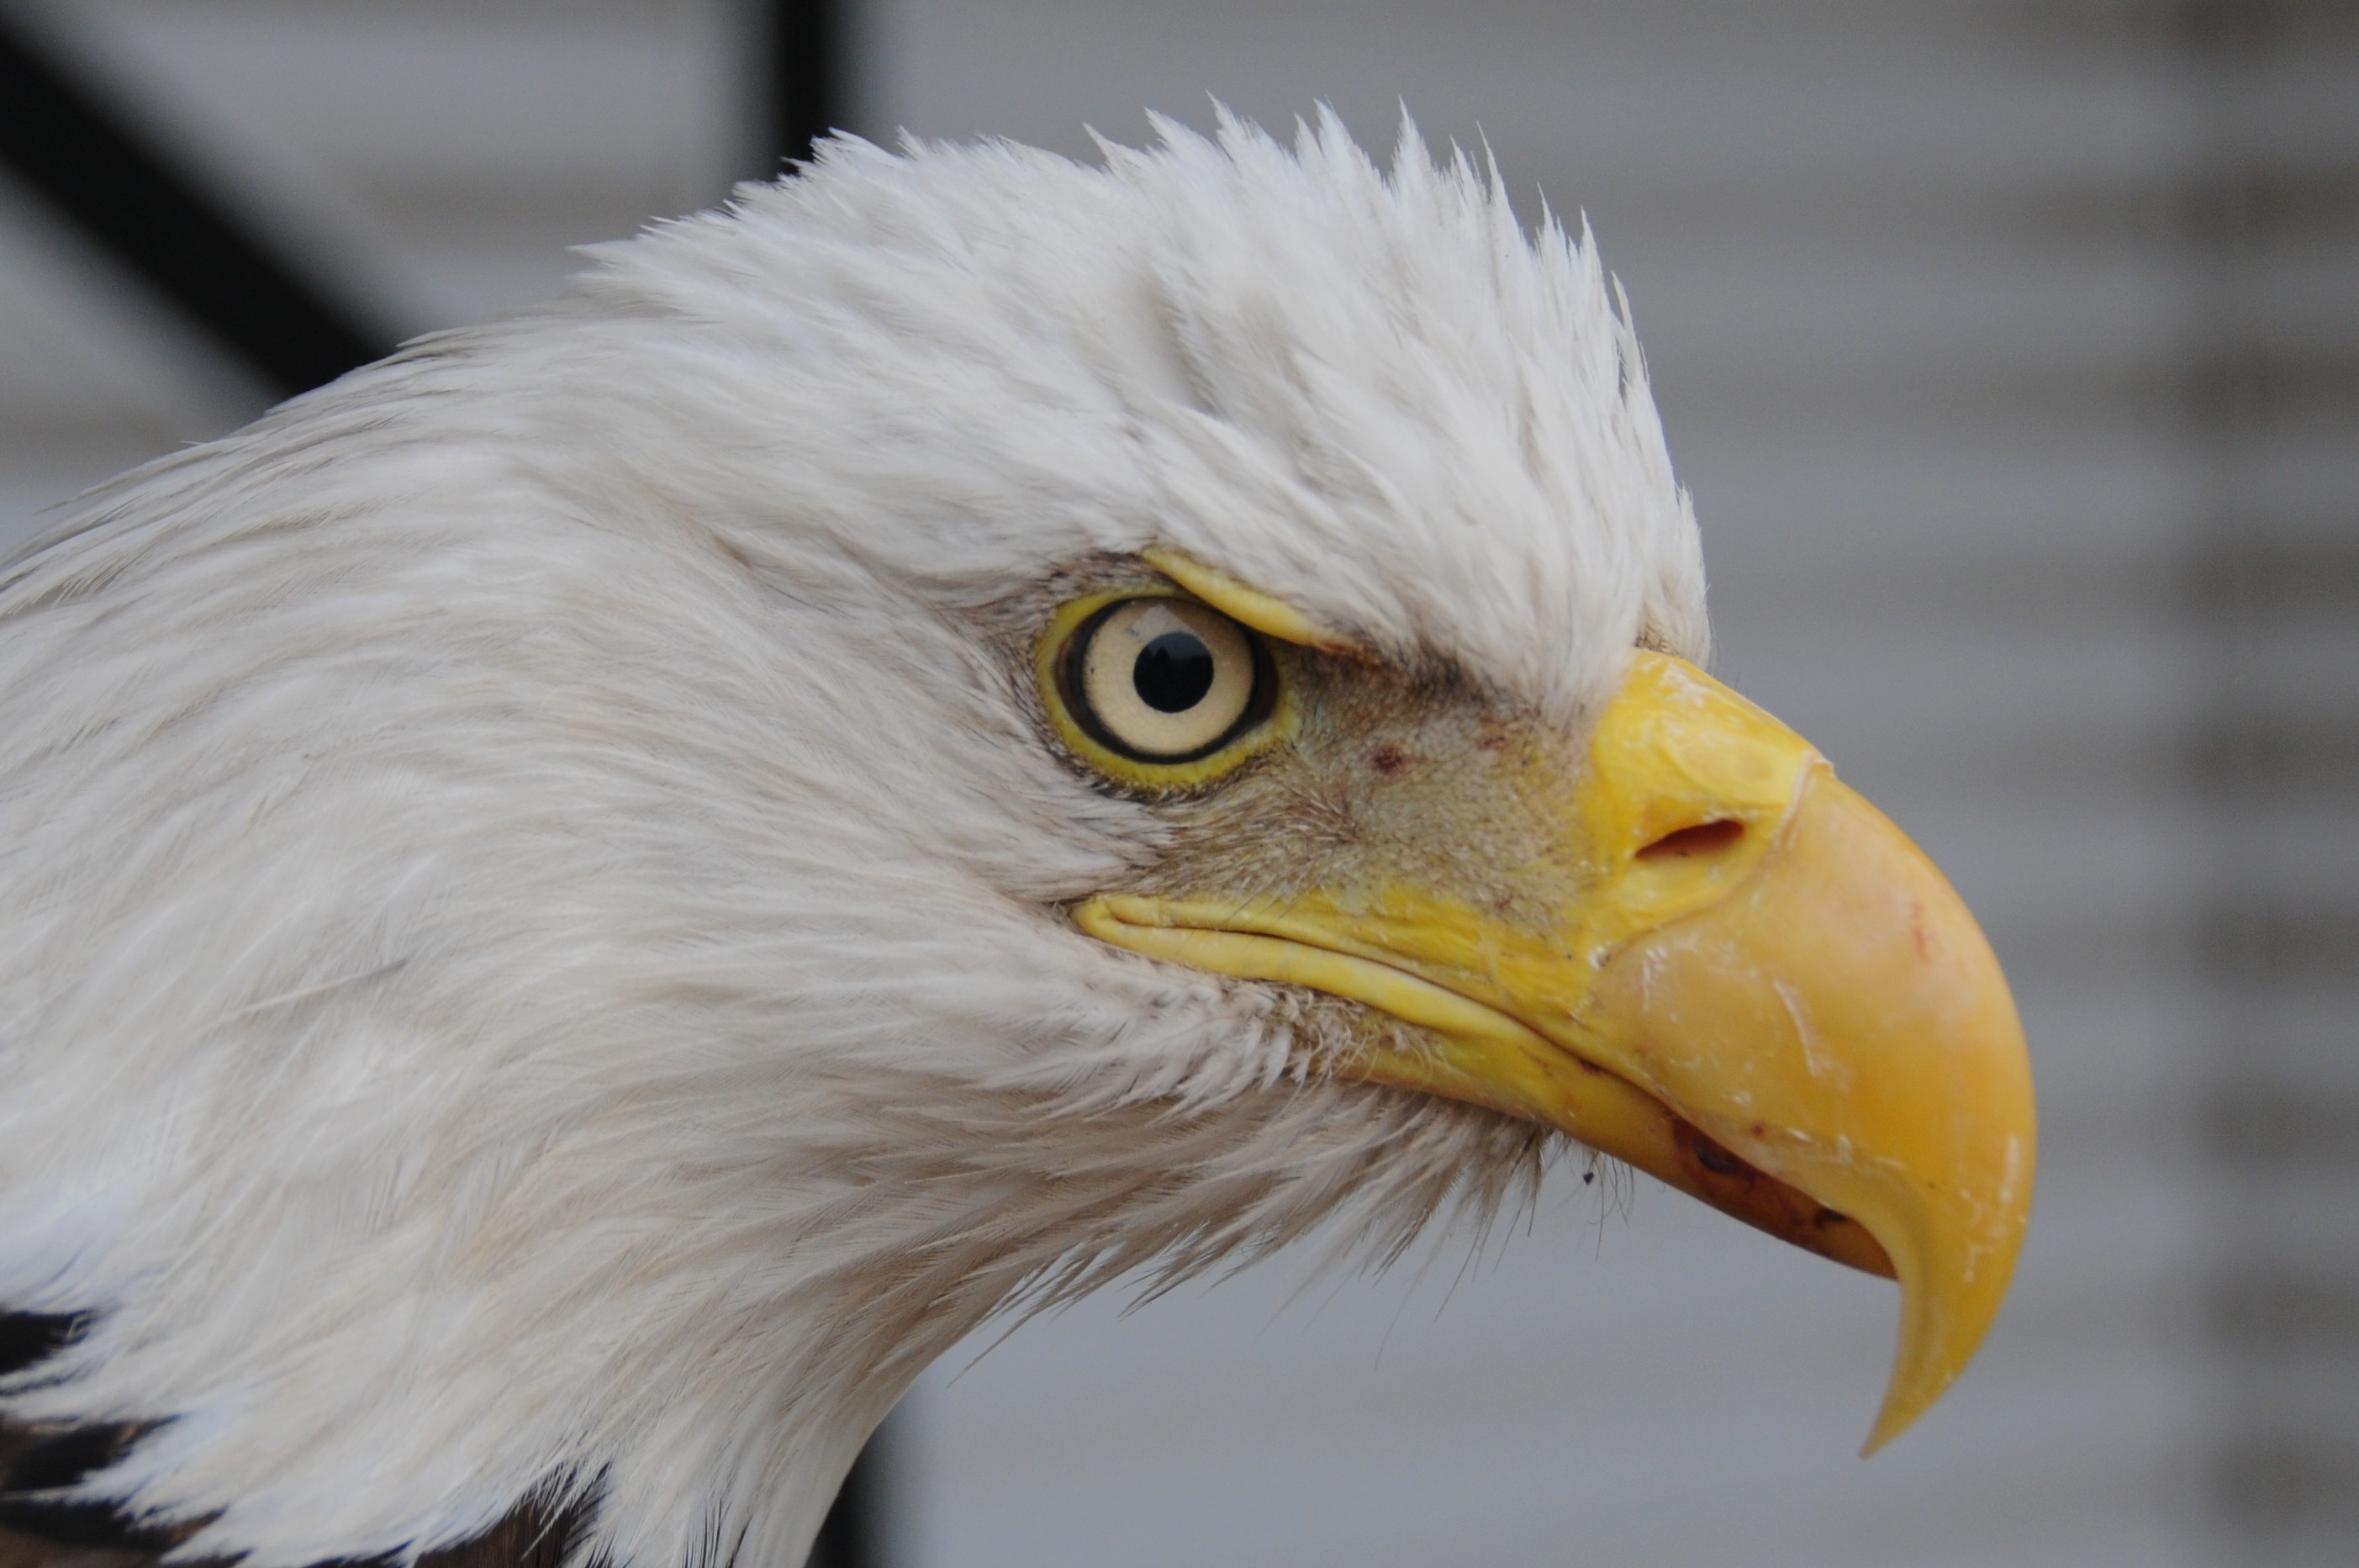 Bald Eagle Eyes and Vision - The Center for Conservation Biology